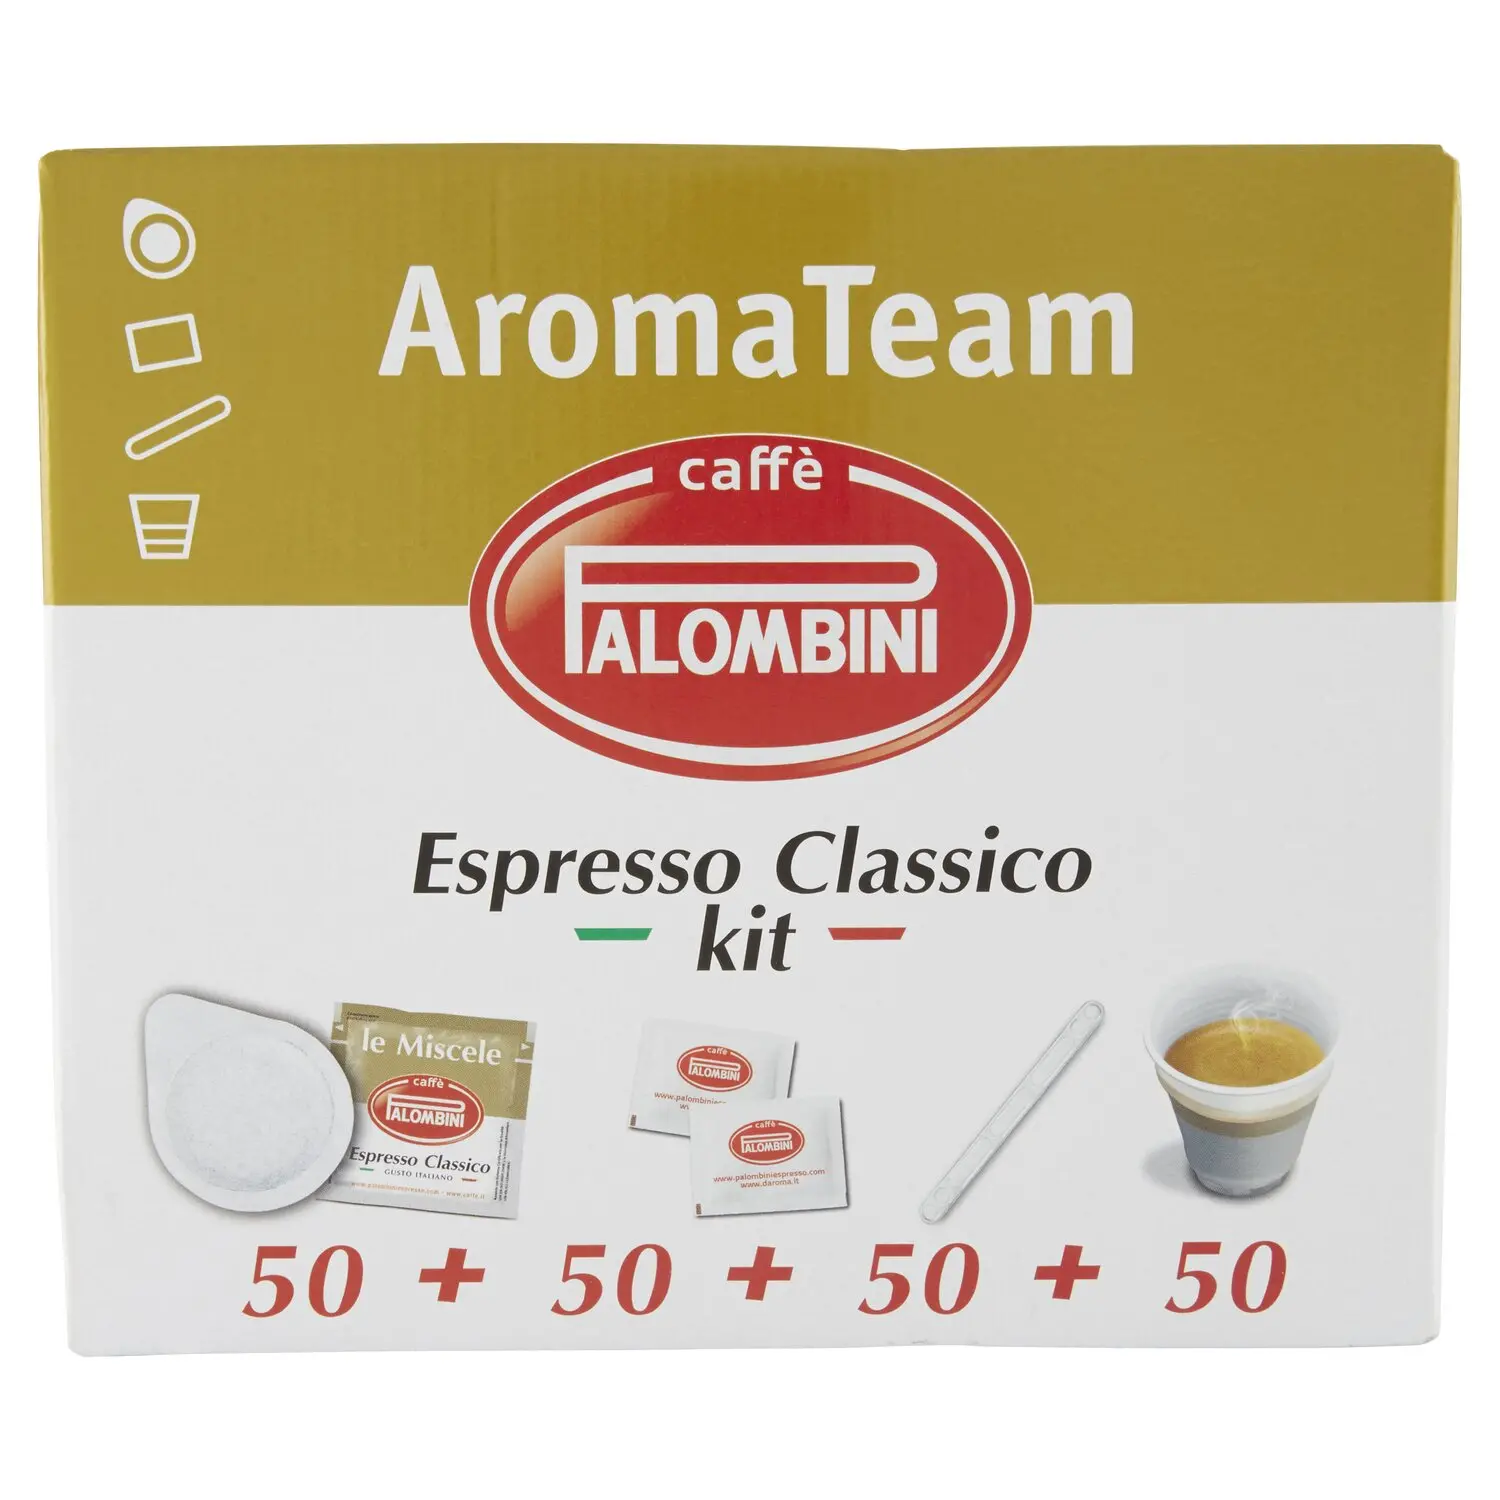 KIT CAFFE ESPRESSO PALOMBINI CLASSICO AROMA TEAM